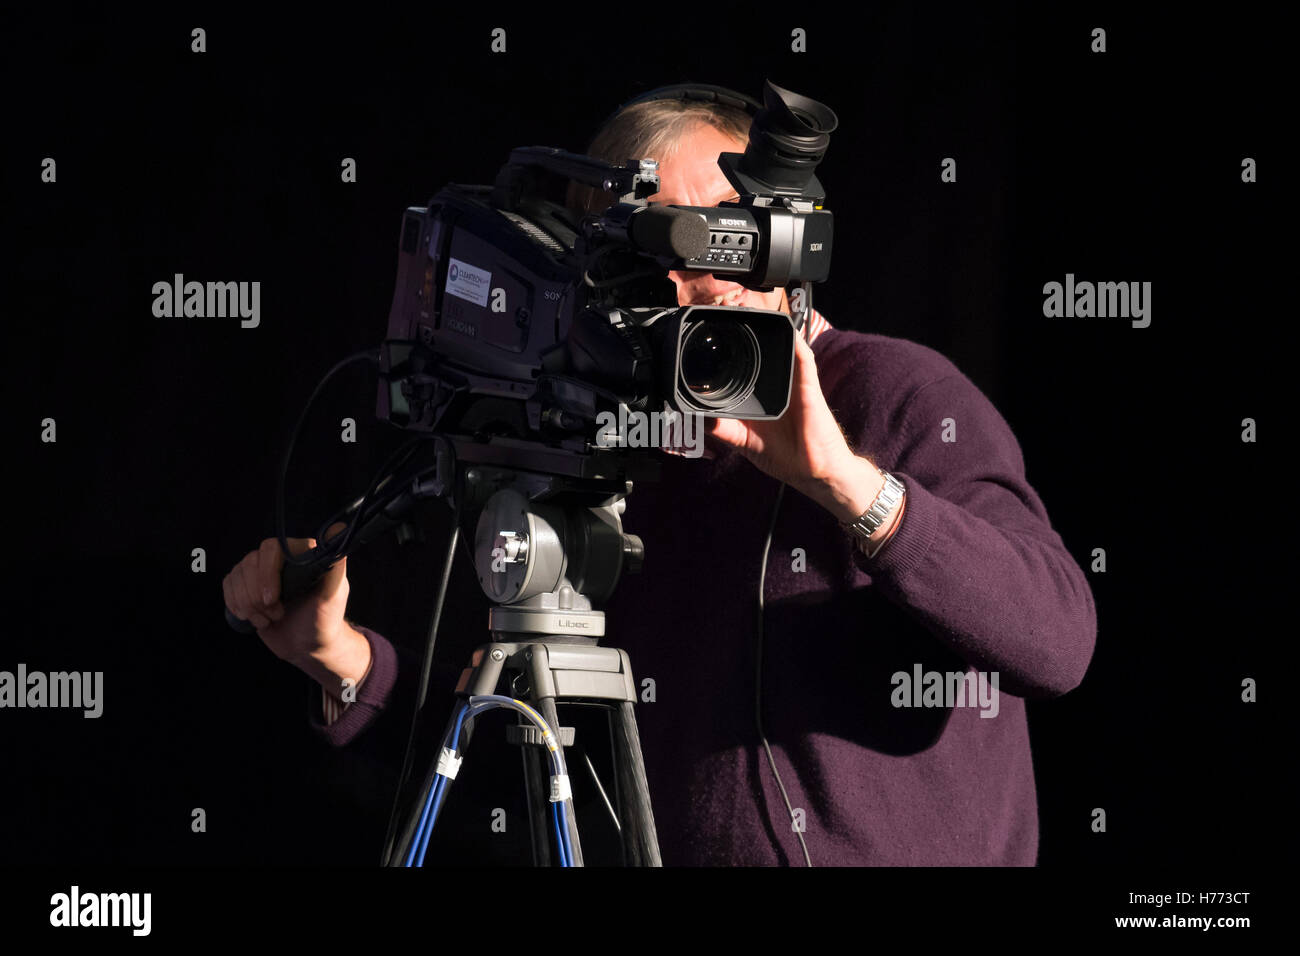 A TV cameraman operating a broadcast camera. Stock Photo